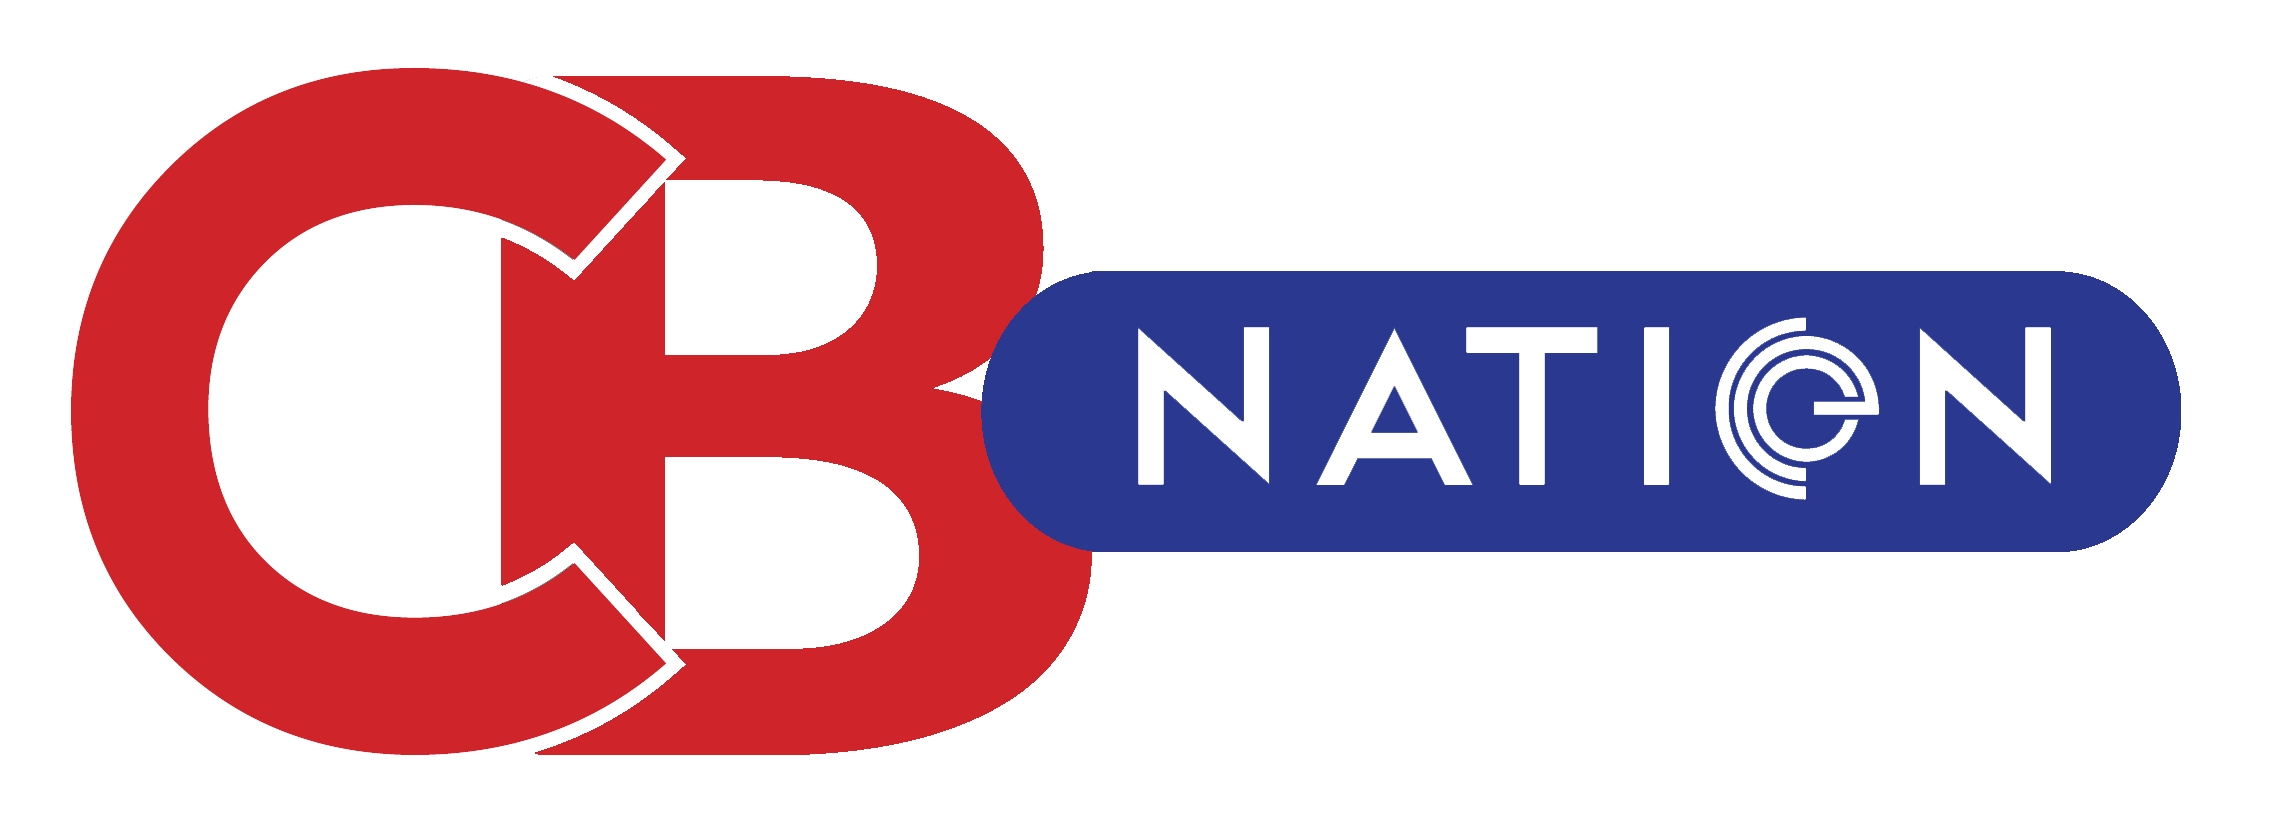 CBNation-logo